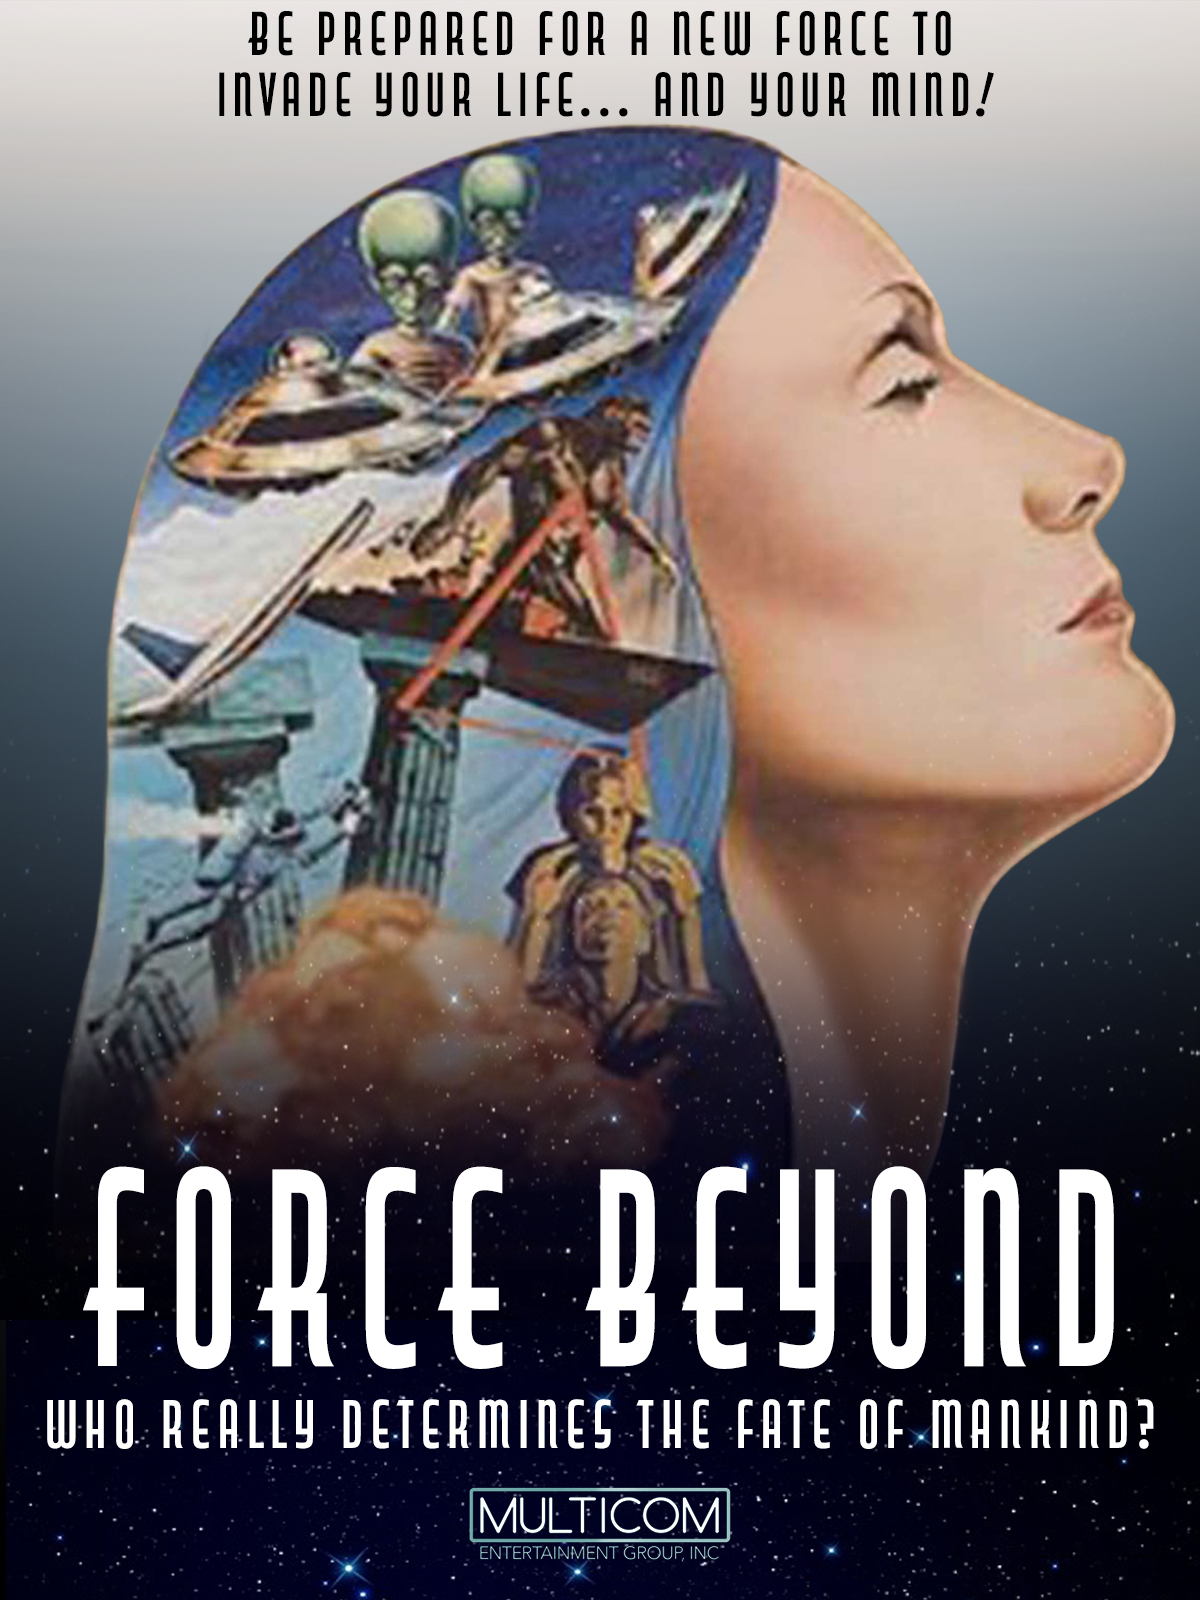 The Force Beyond (1977) Screenshot 1